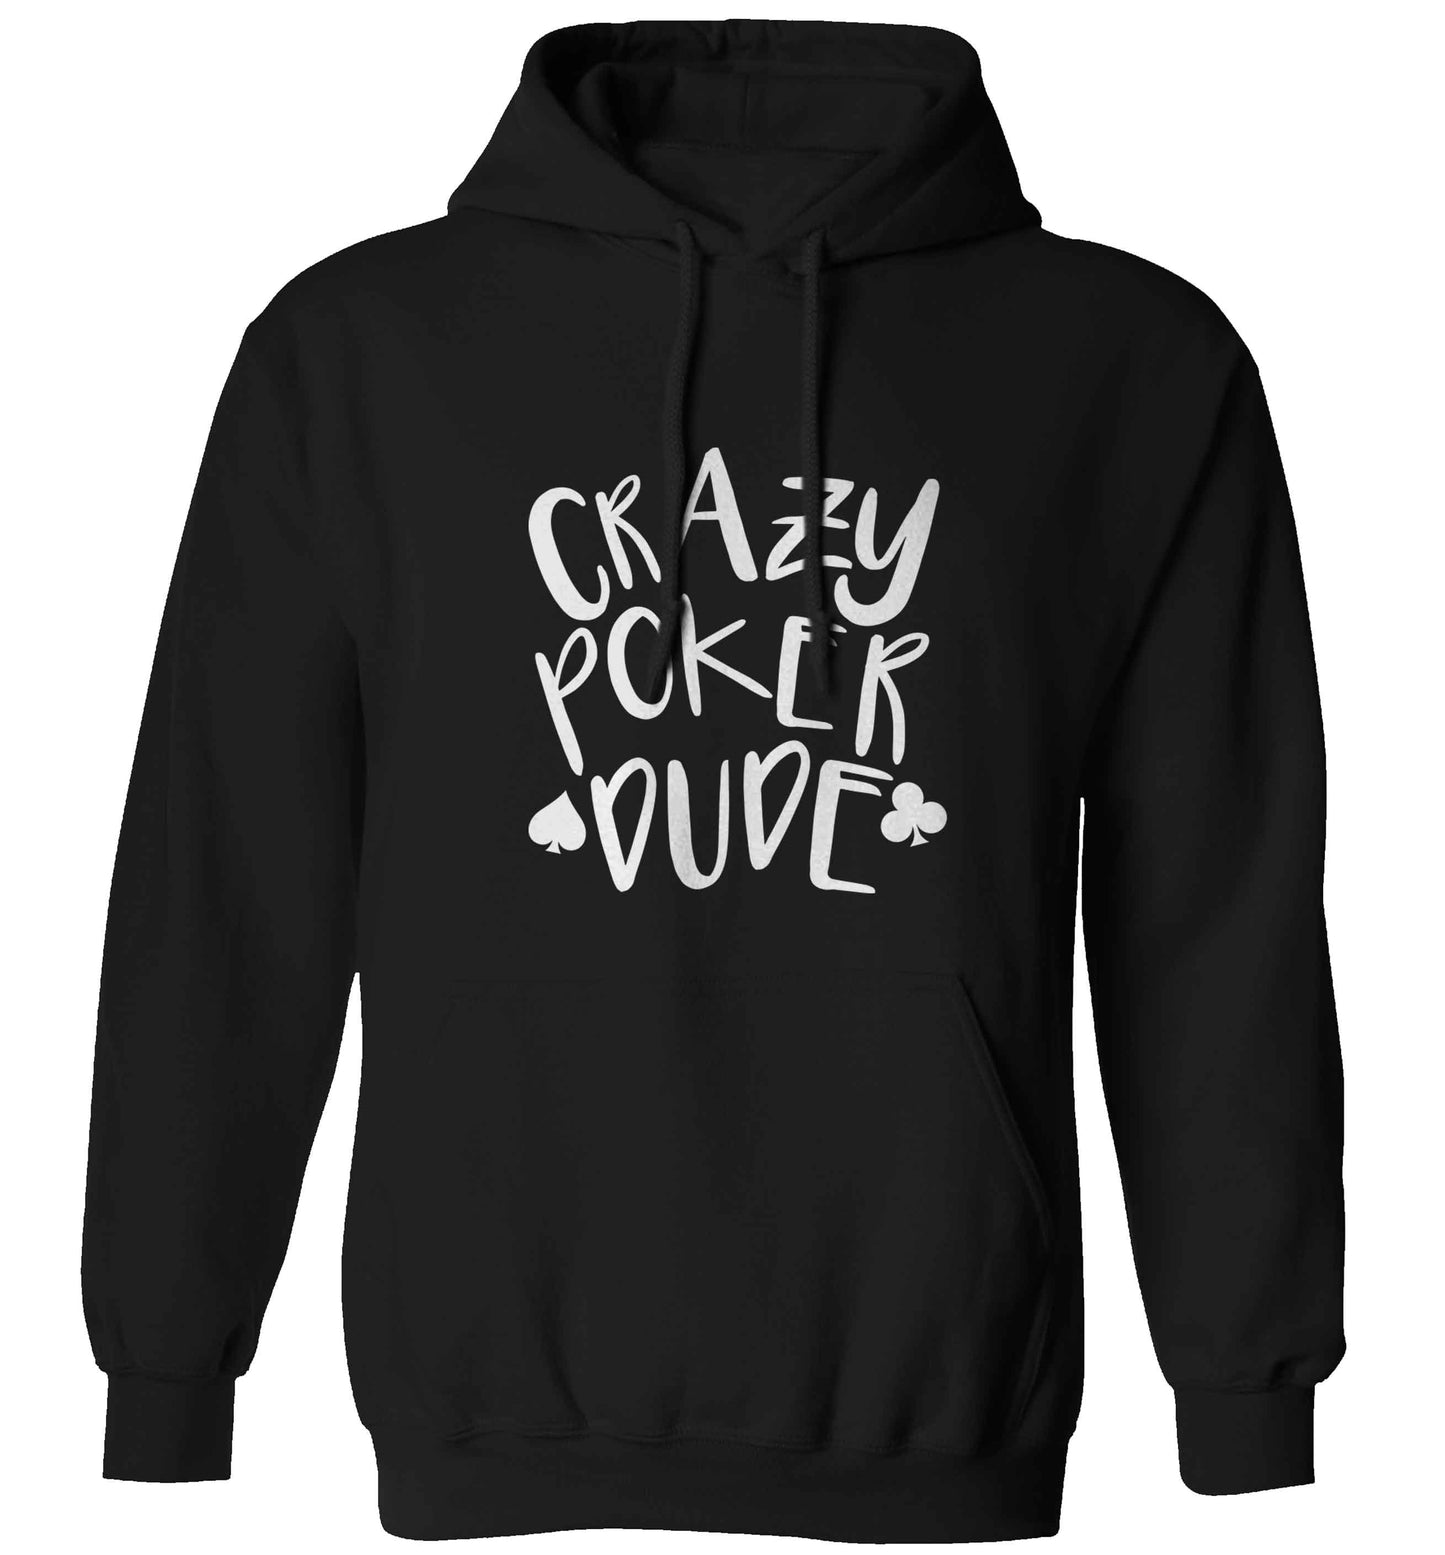 Crazy poker dude adults unisex black hoodie 2XL